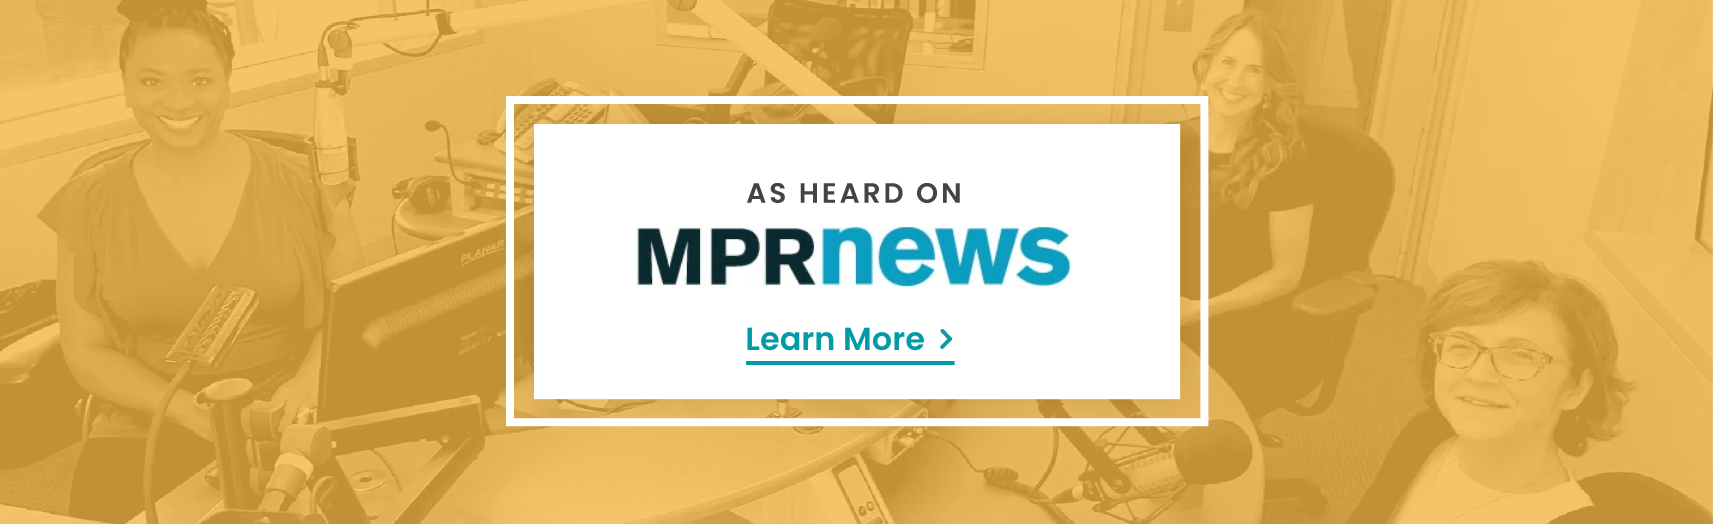 As Heard on MPR News - Learn More